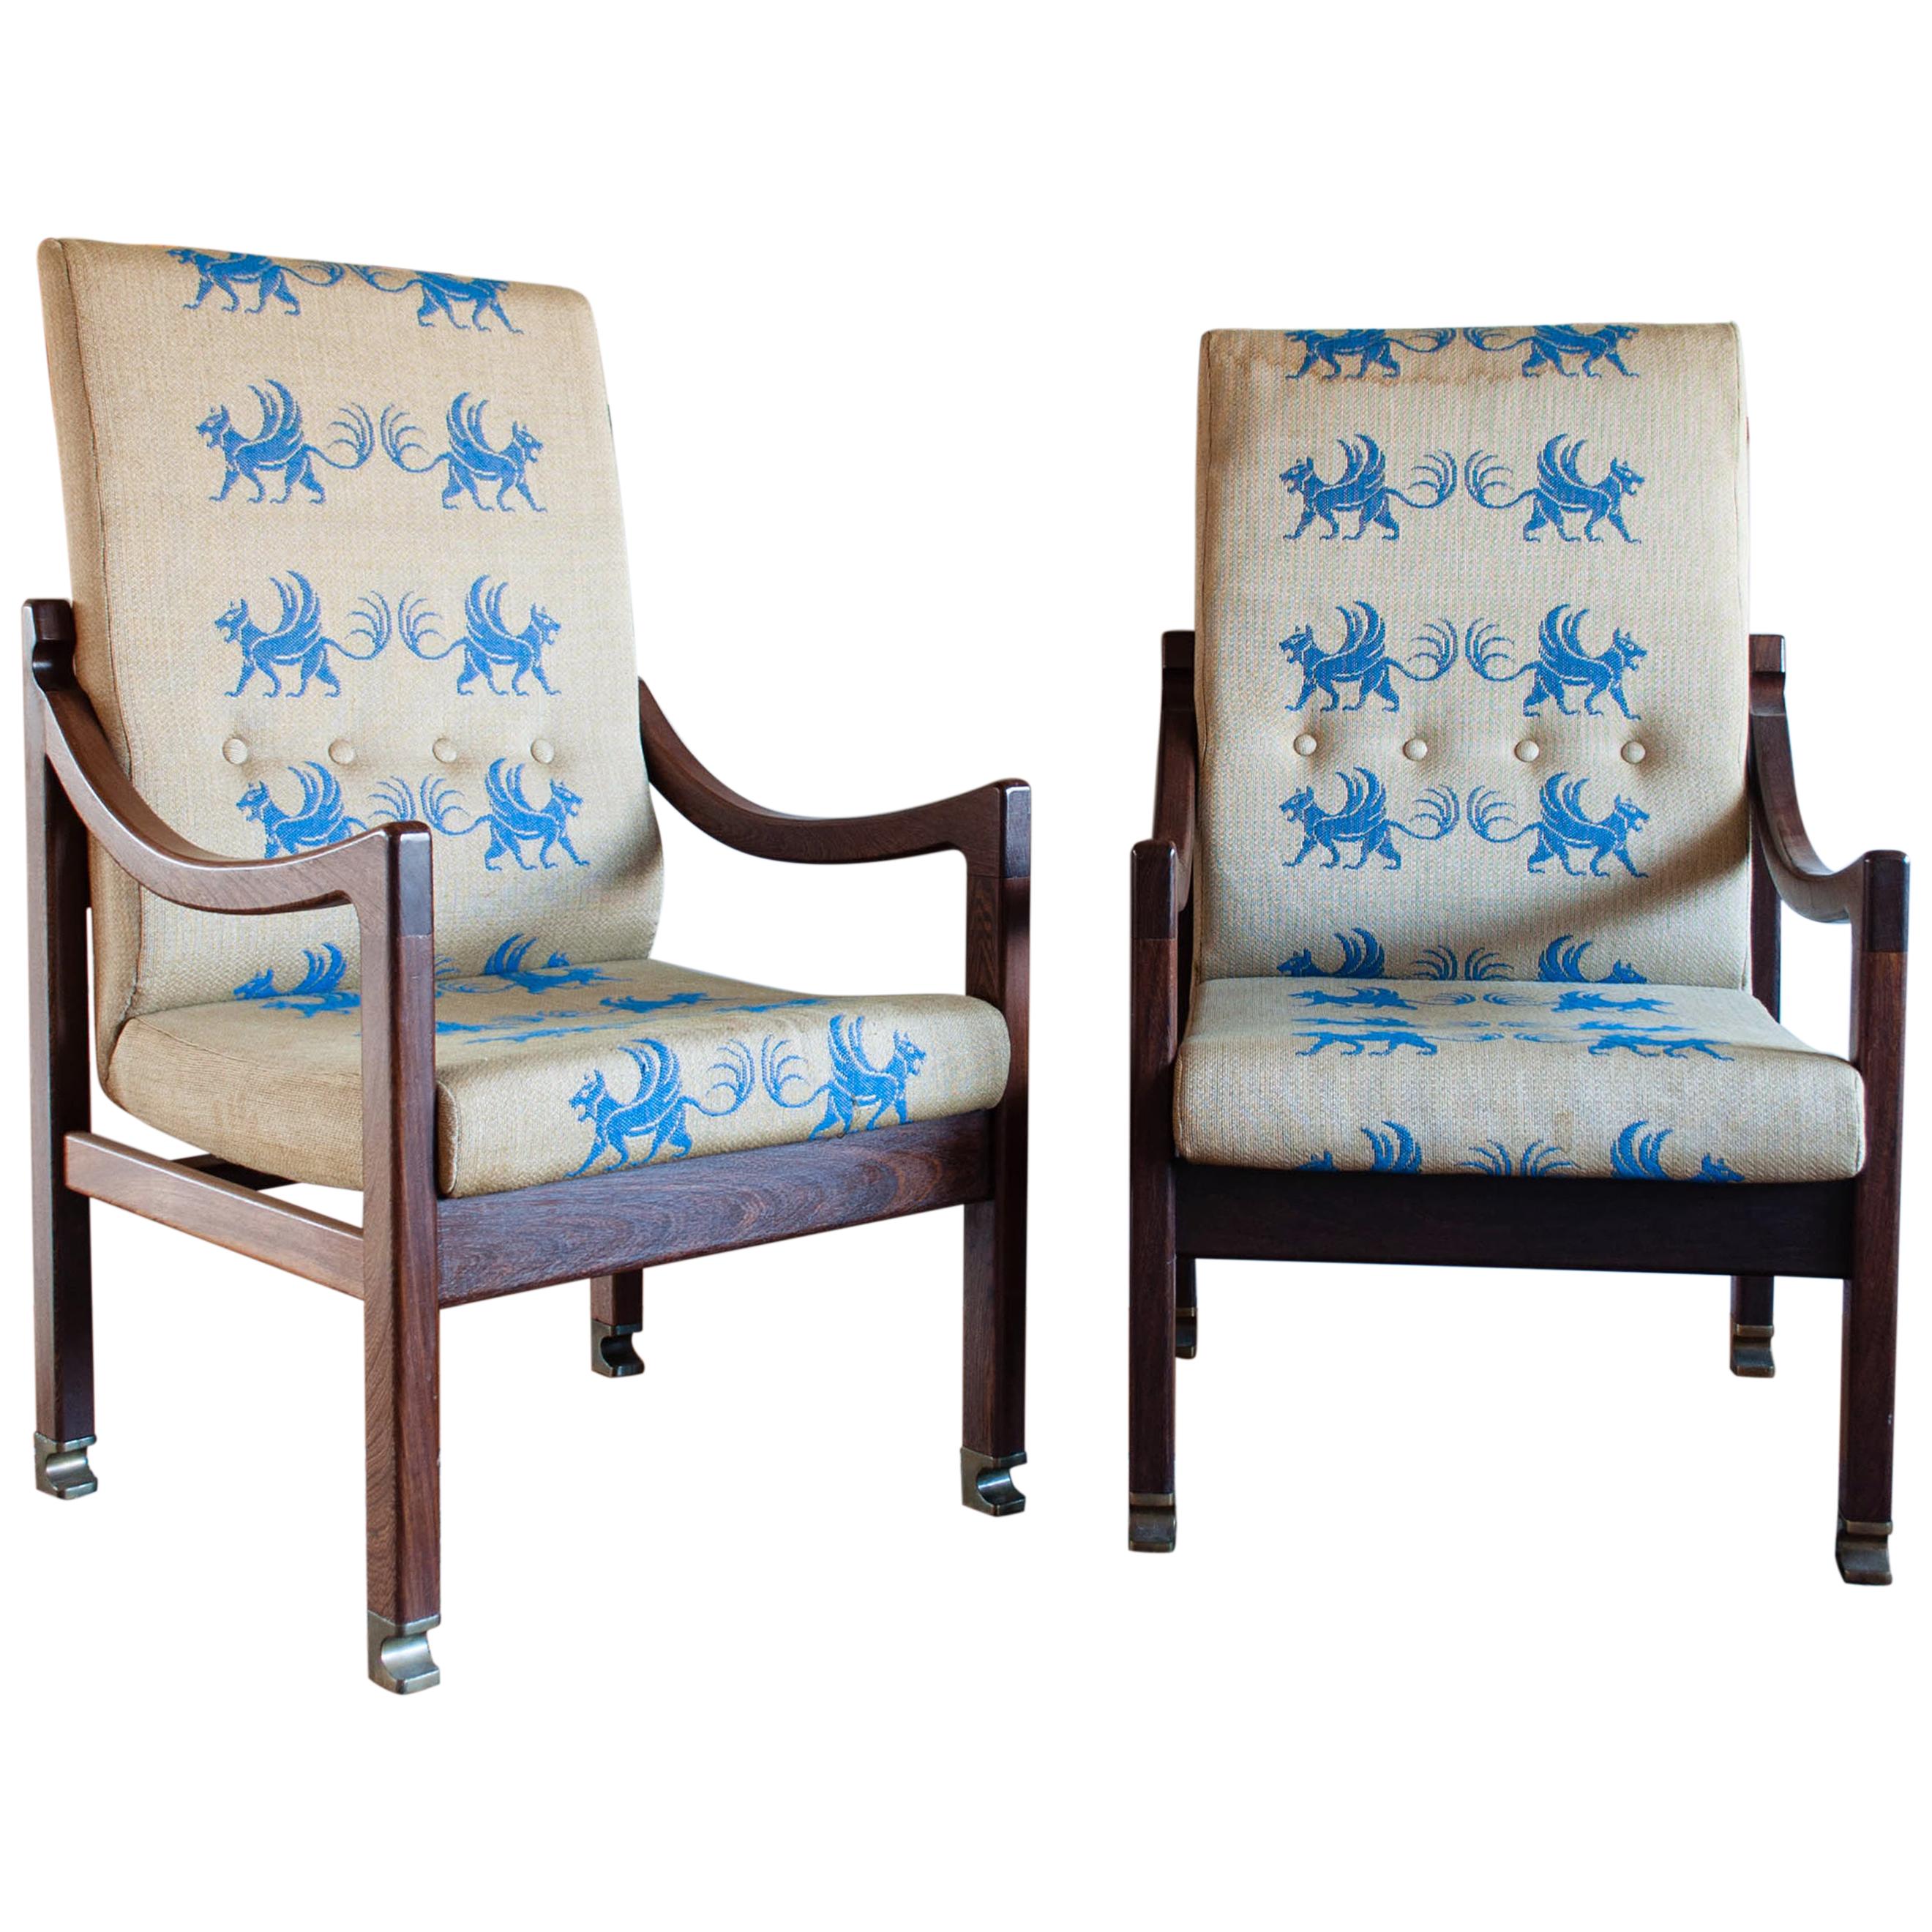 Ib Kofod-Larsen Megiddo Lounge Chair, a Pair For Sale